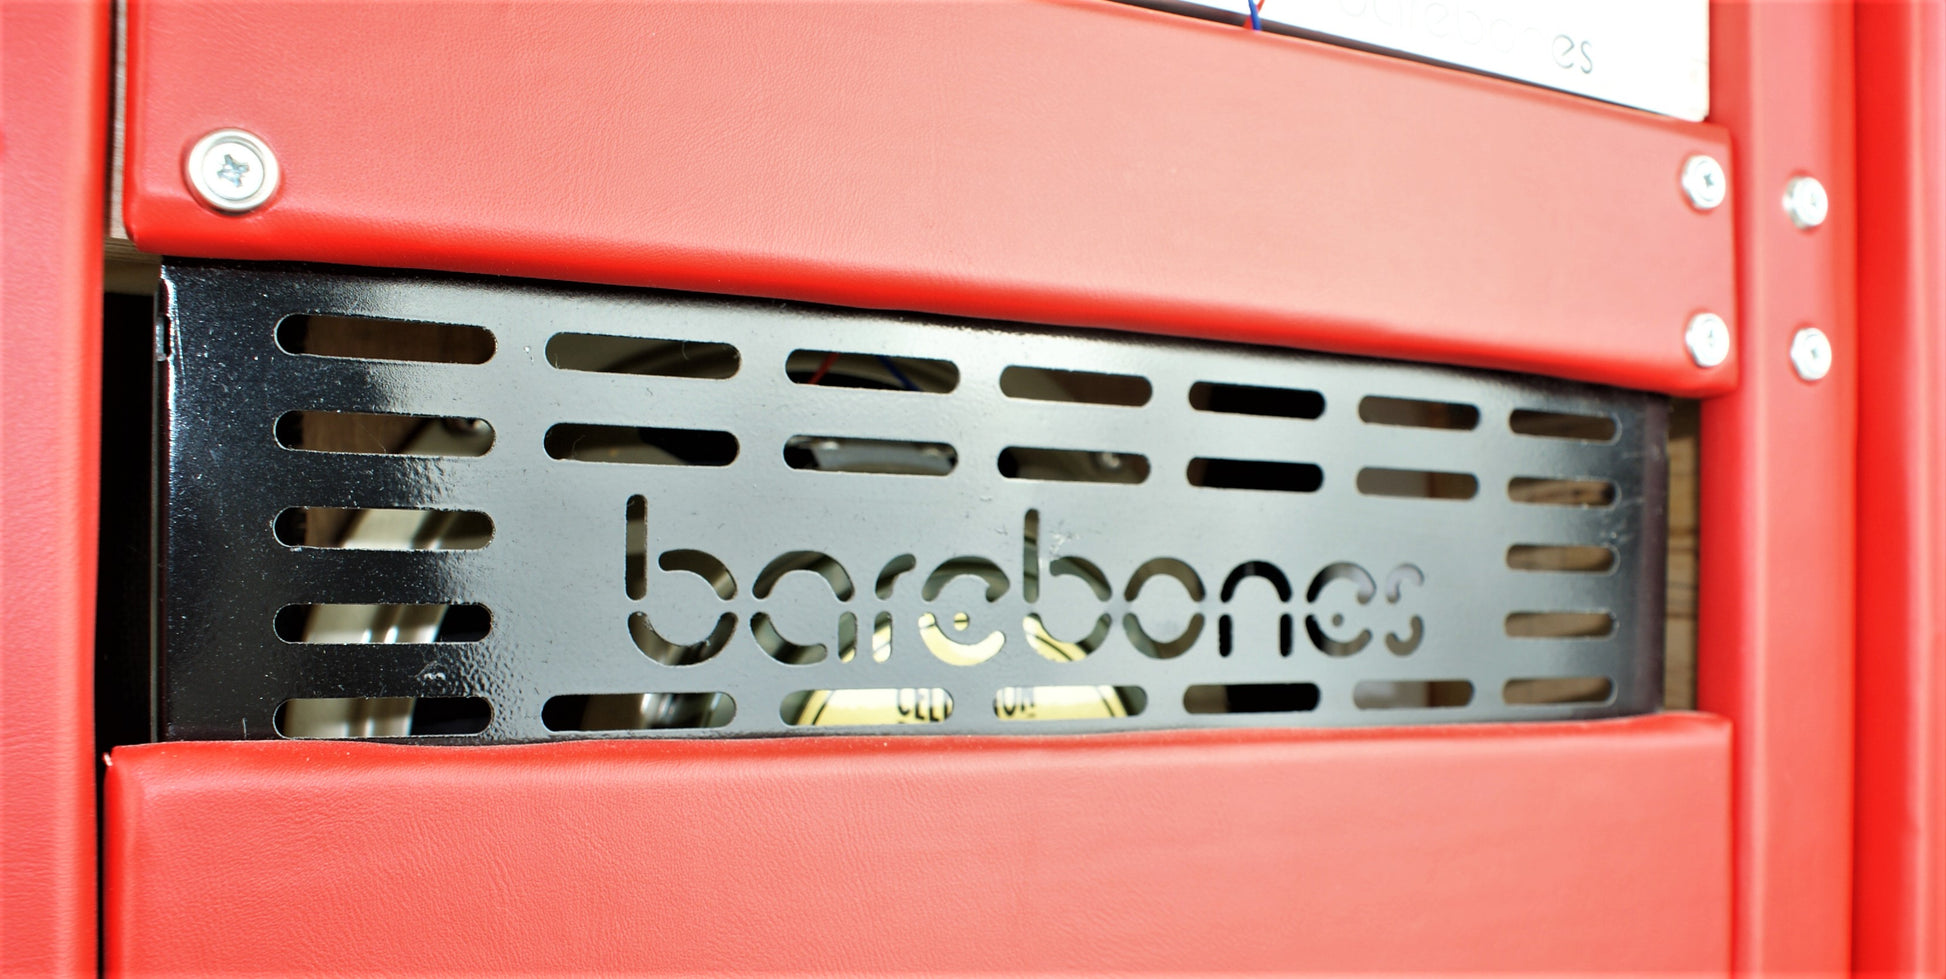 barebones Monaco Lite SE Red - Handwired All-Valve Guitar Amplifier